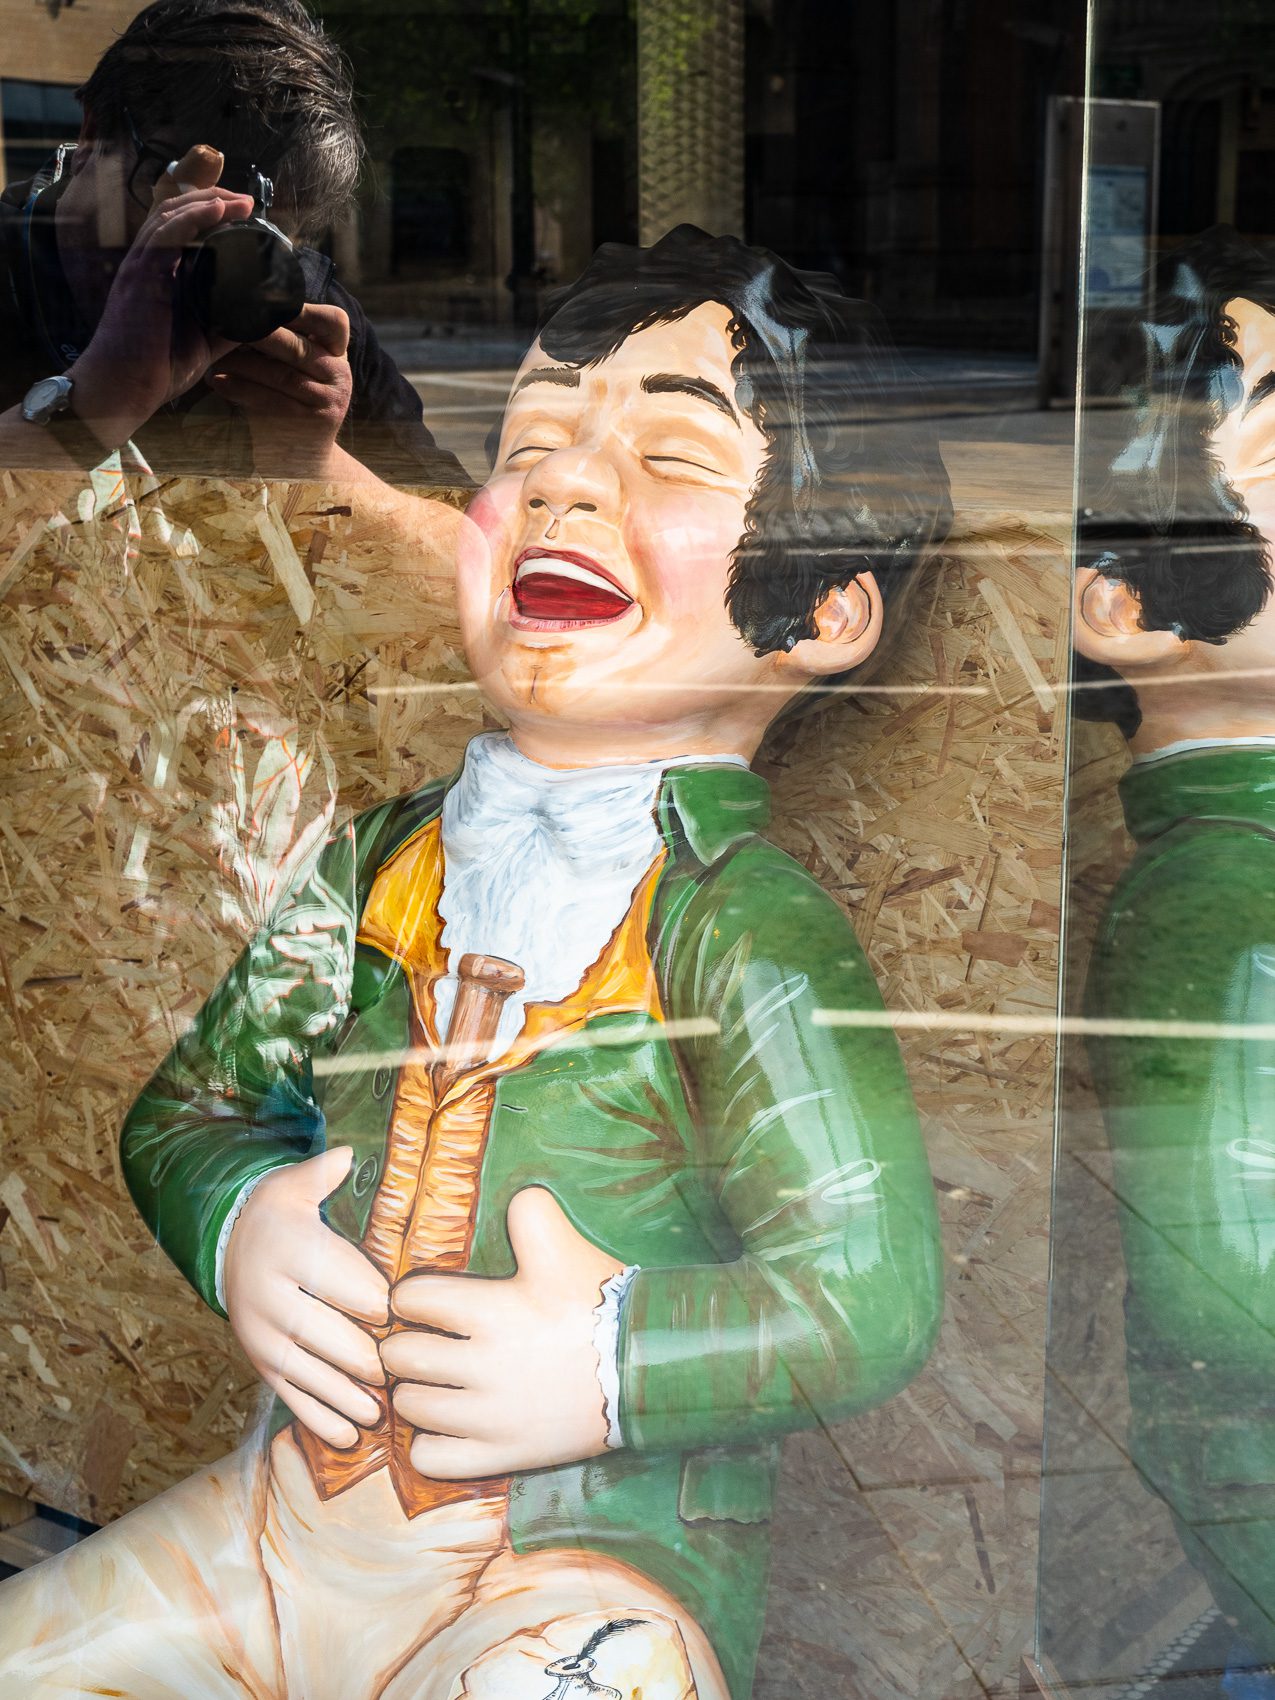 Statue of Robert Burns in a pub window during the Coronavirus lockdown, Nethergate, Dundee, Scotland. DD061